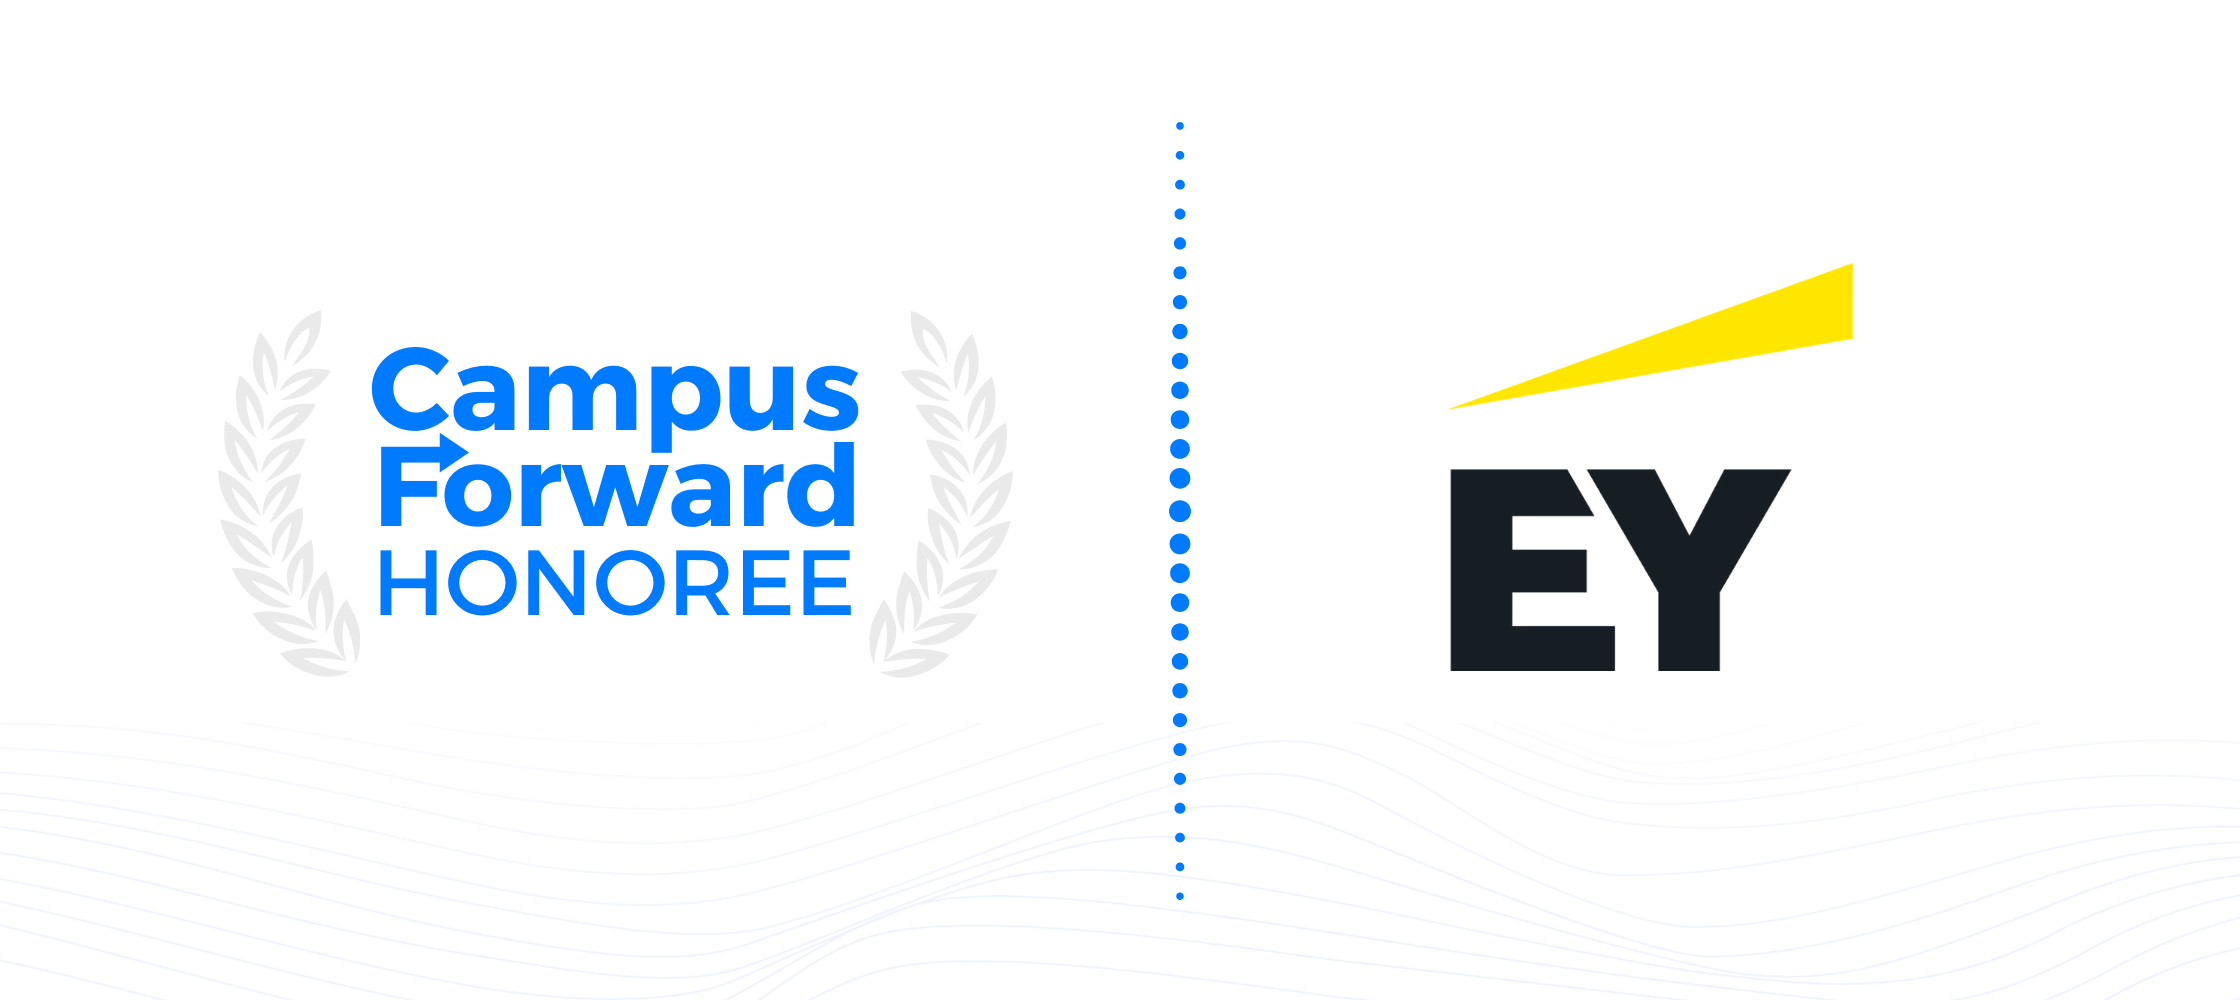 Campus Forward Honoree - EY